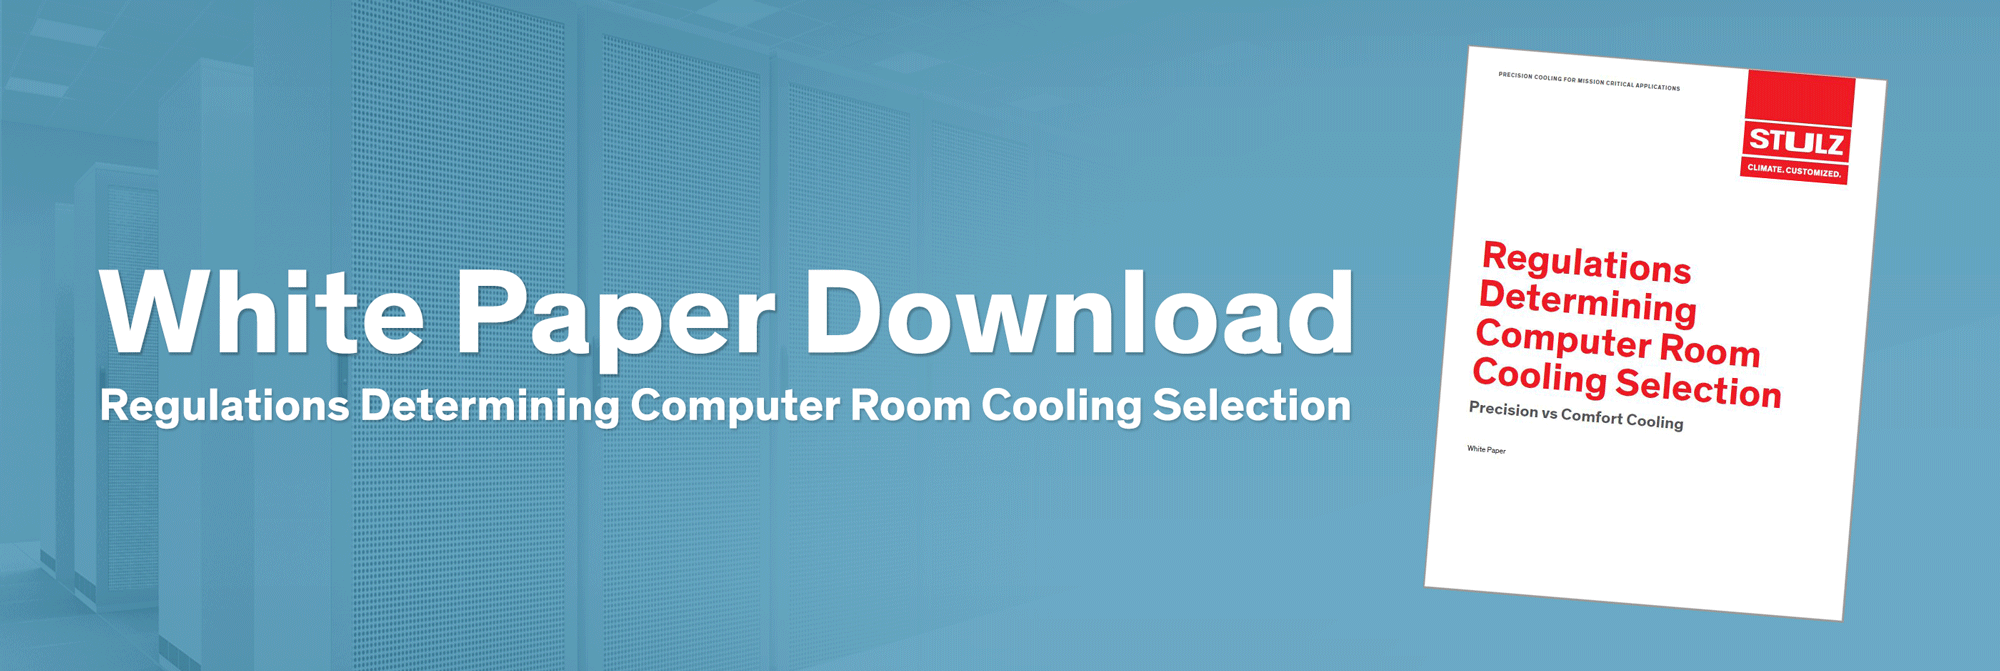 Regulations-Determining-Room-Cooling-Selection-White-Paper-Download-Hubspot-Header.png